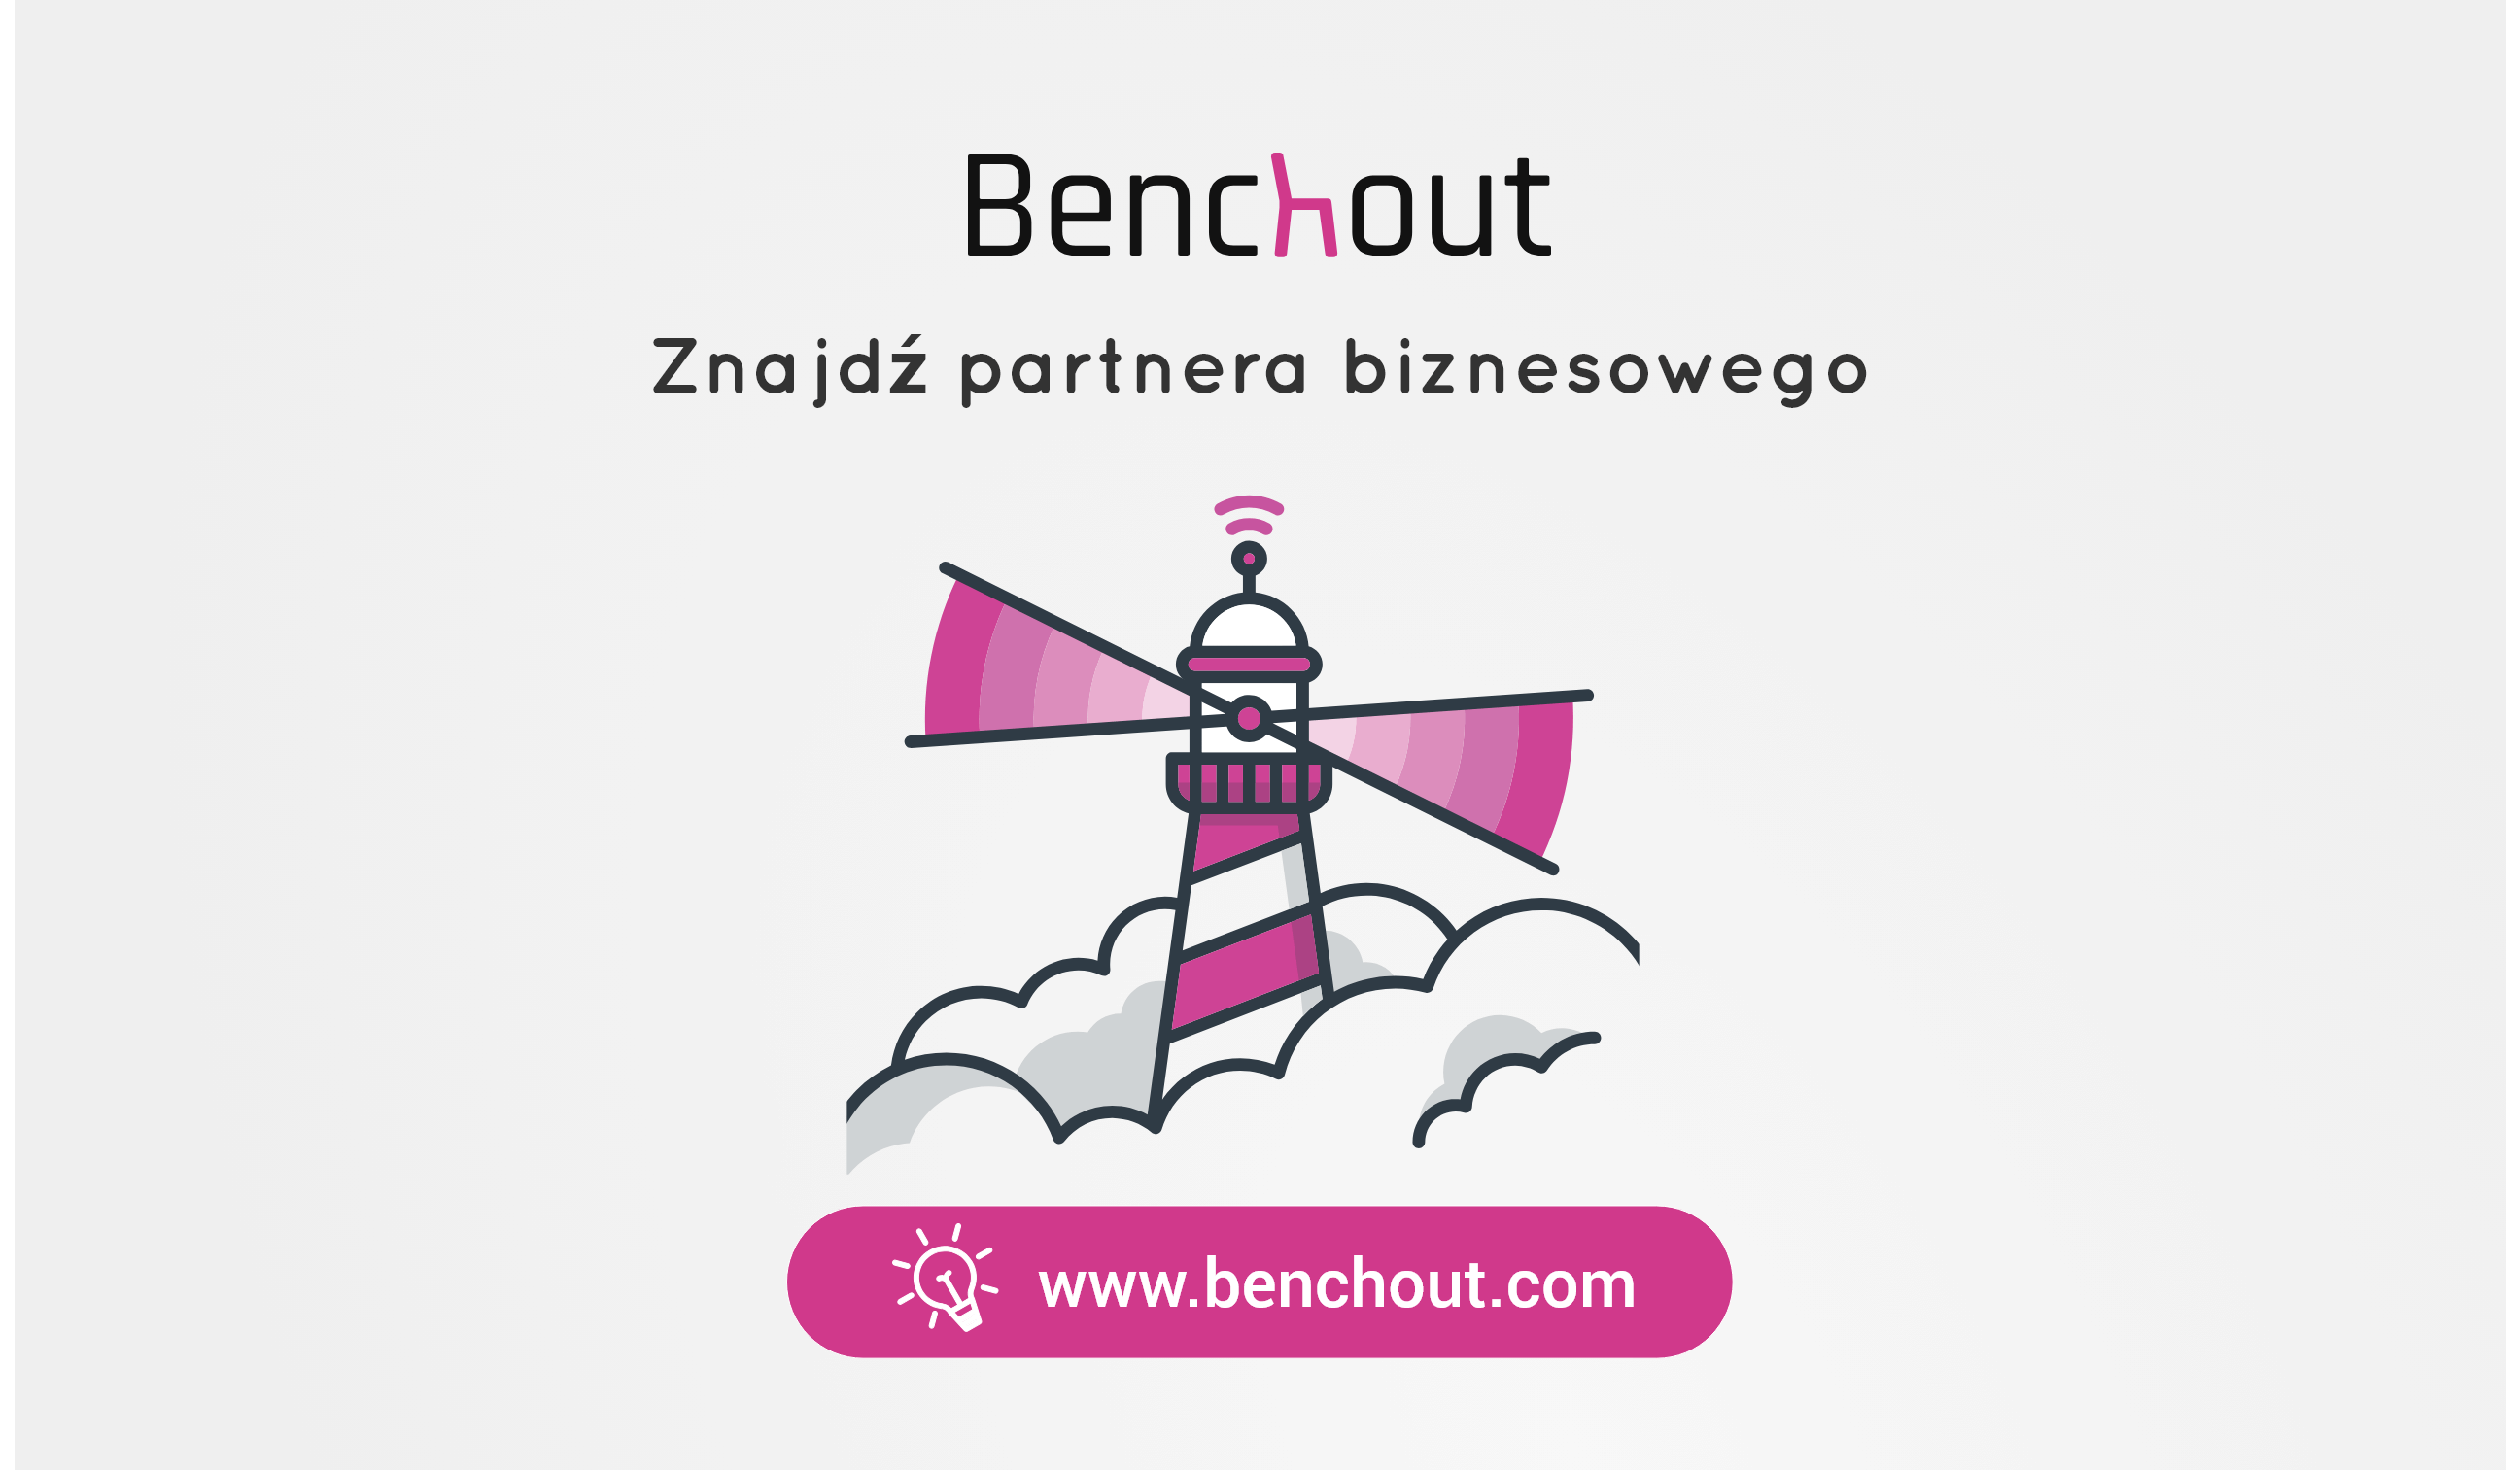 Benchout.com